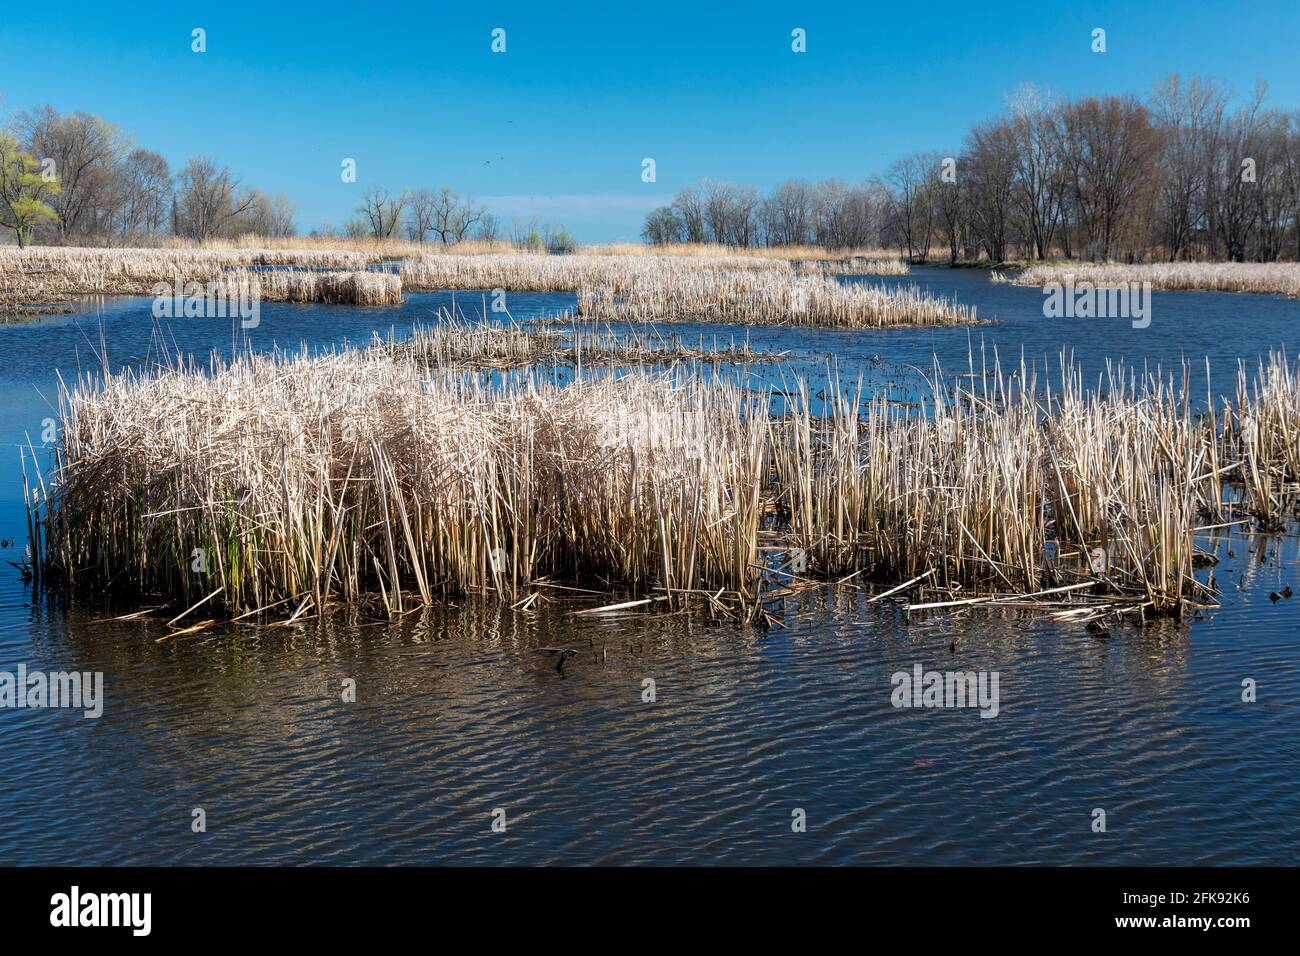 Rockwood, Michigan - Wetland at Lake Erie Metropark. Stock Photo